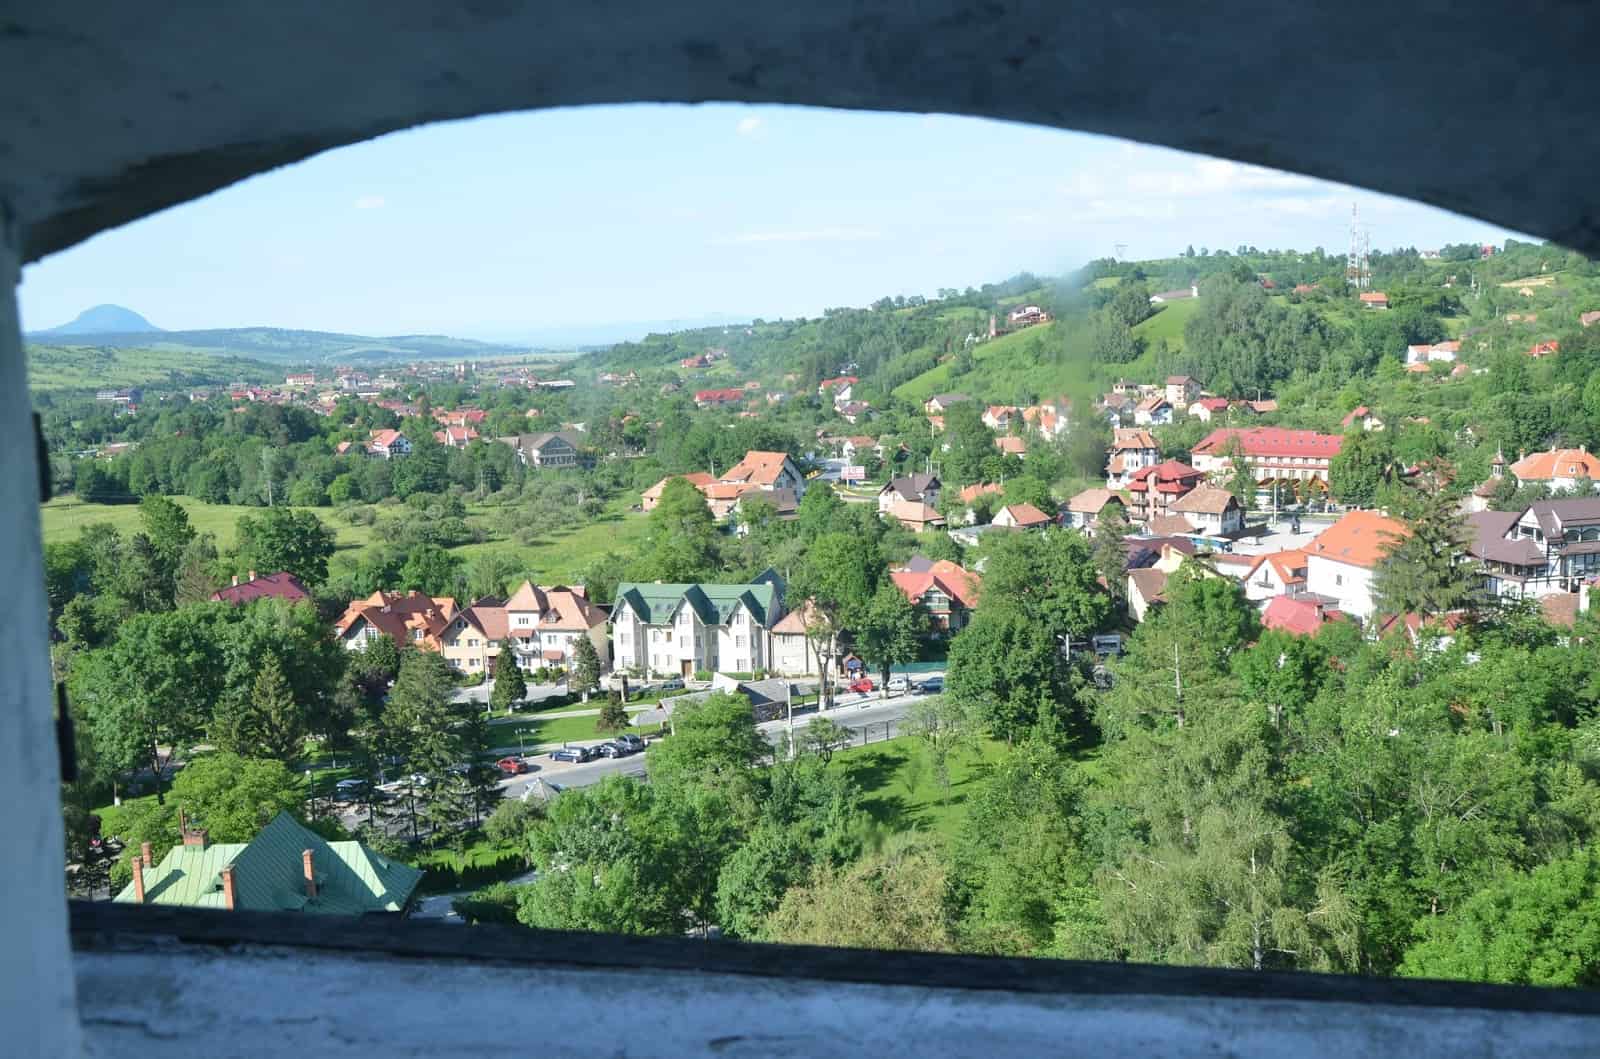 View from Bran Castle in Bran, Romania